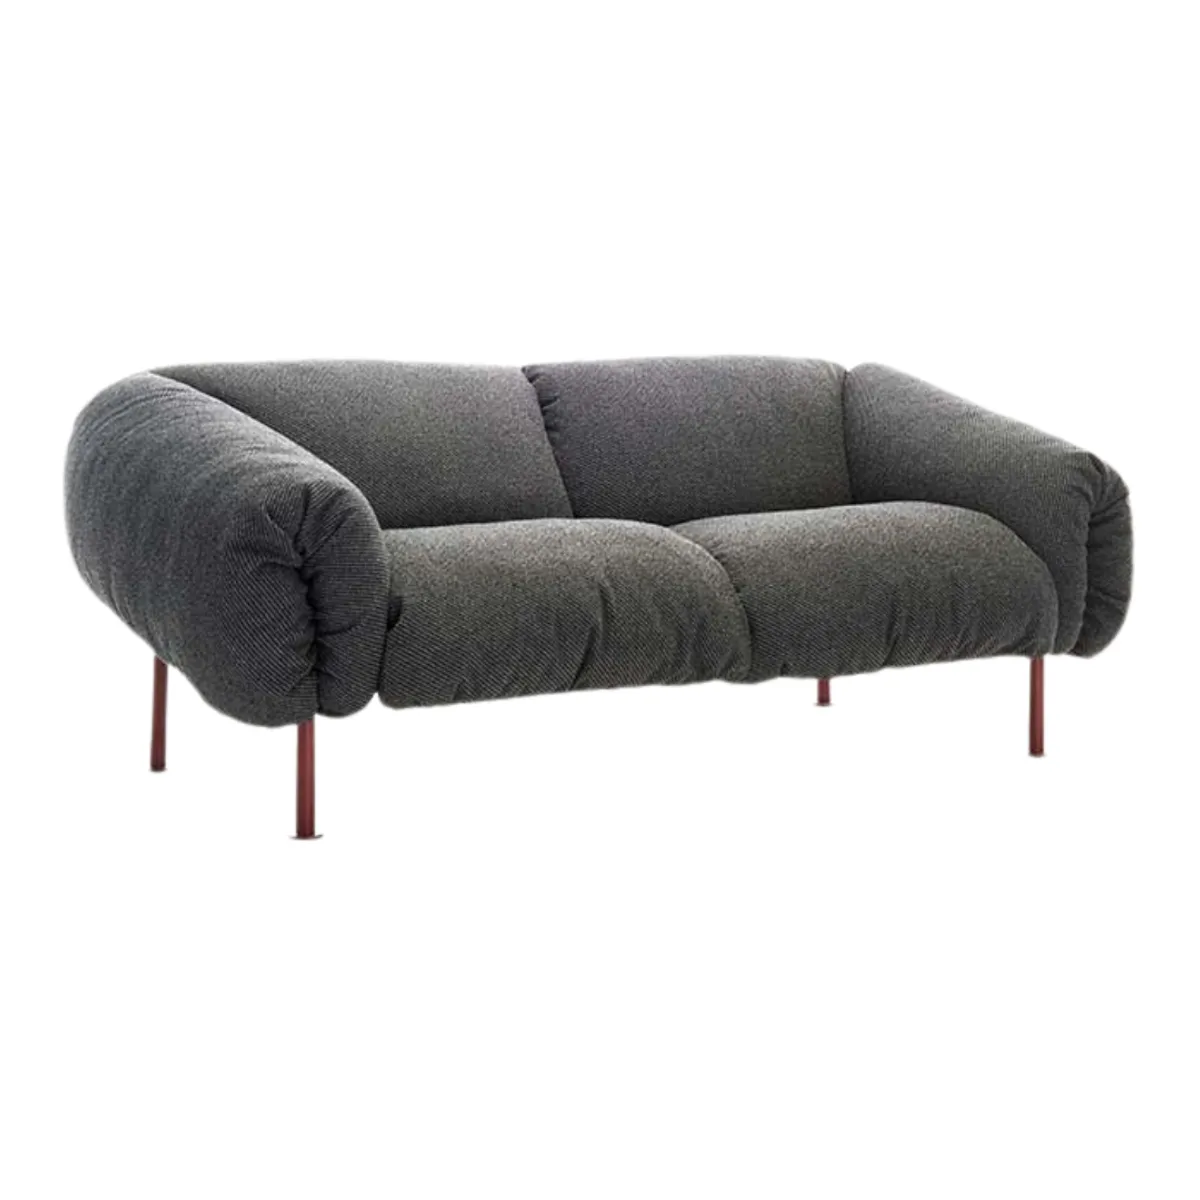 Albion sofa 2